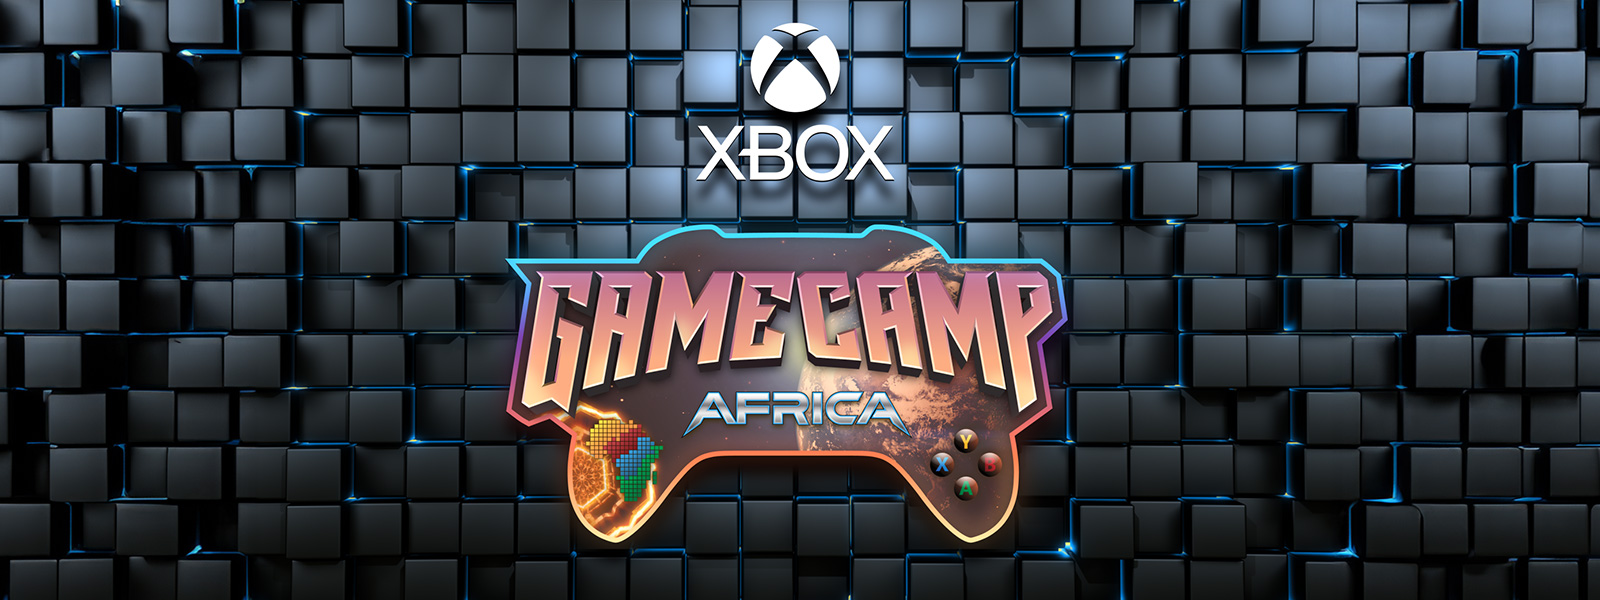 Xbox Game Camp Africa logo.